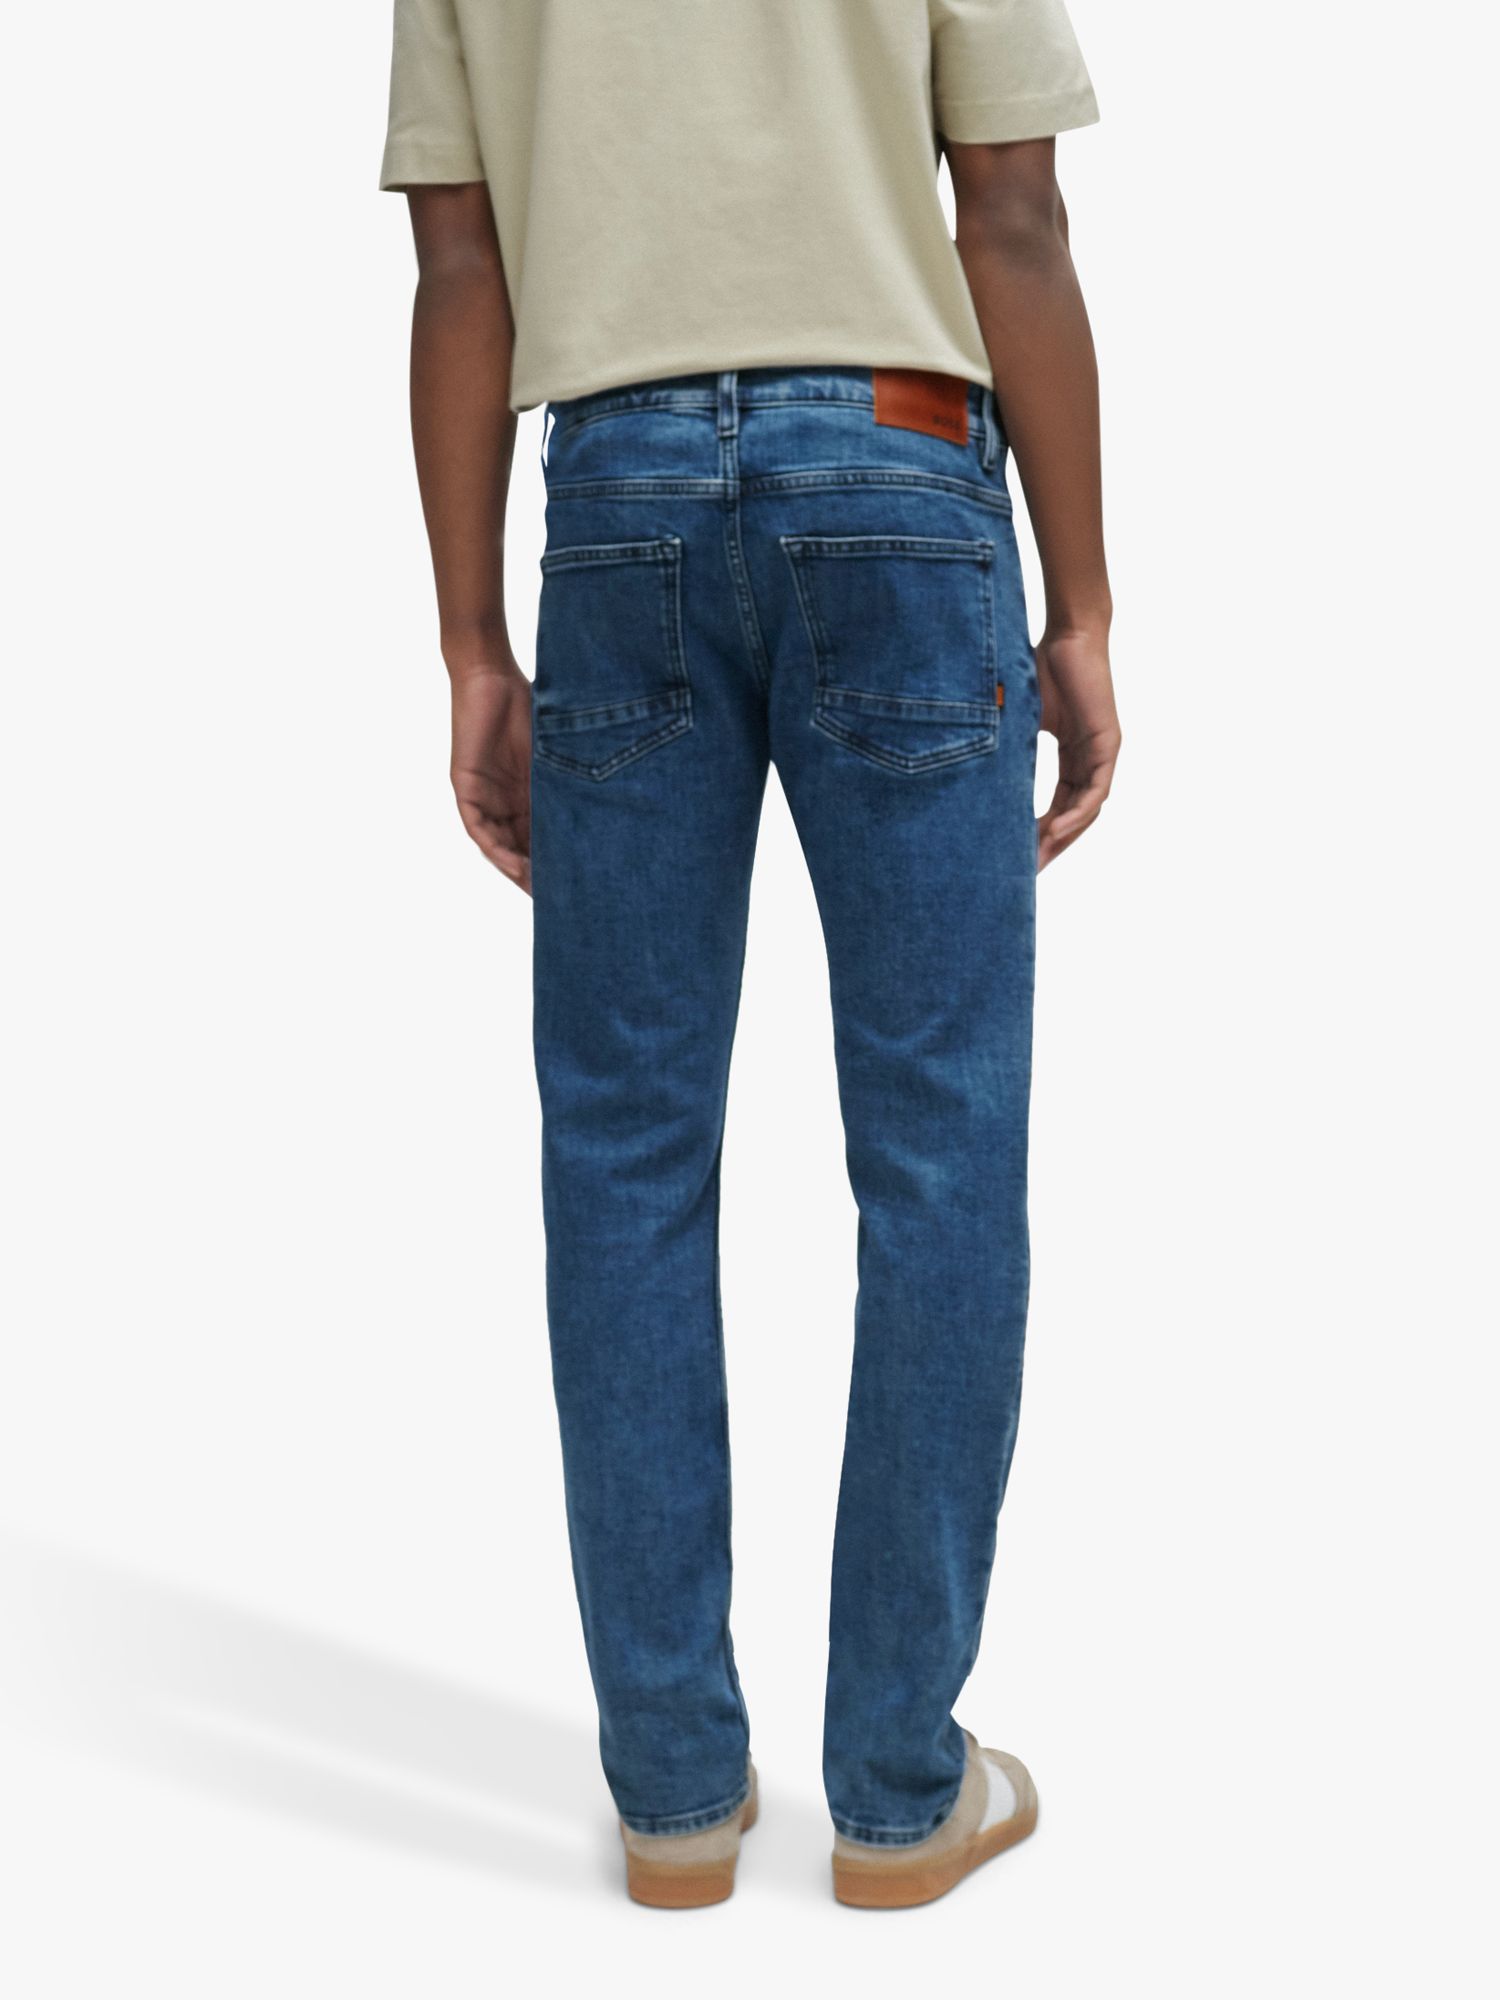 BOSS Delaware Cotton Blend Jeans, Medium Blue, 30R